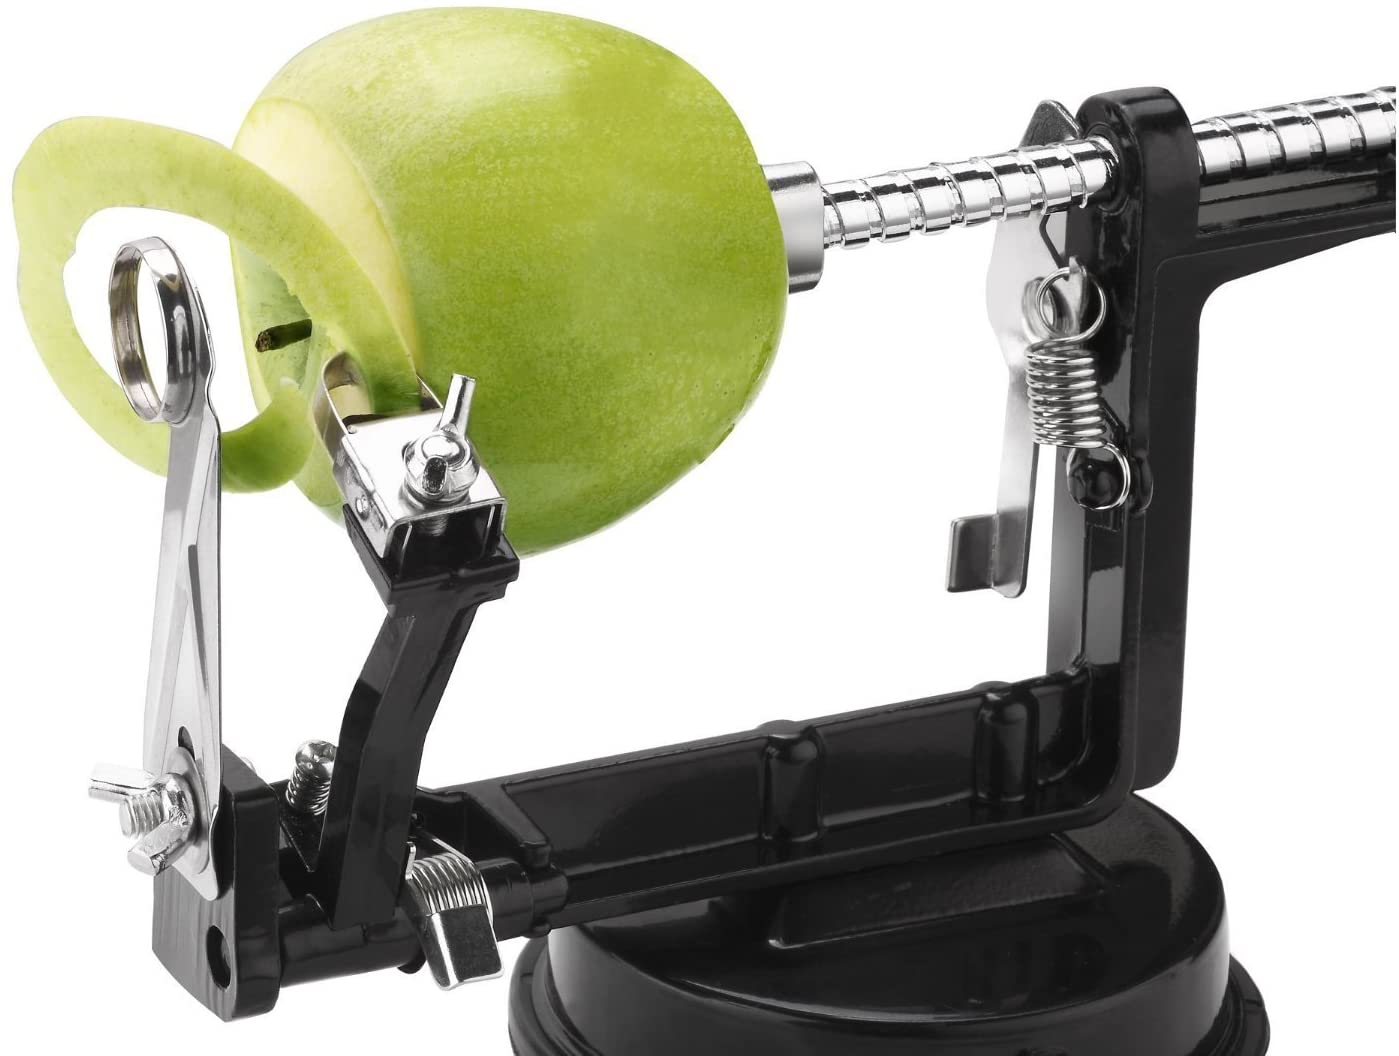 ICO 3 in 1 Apple Peeler